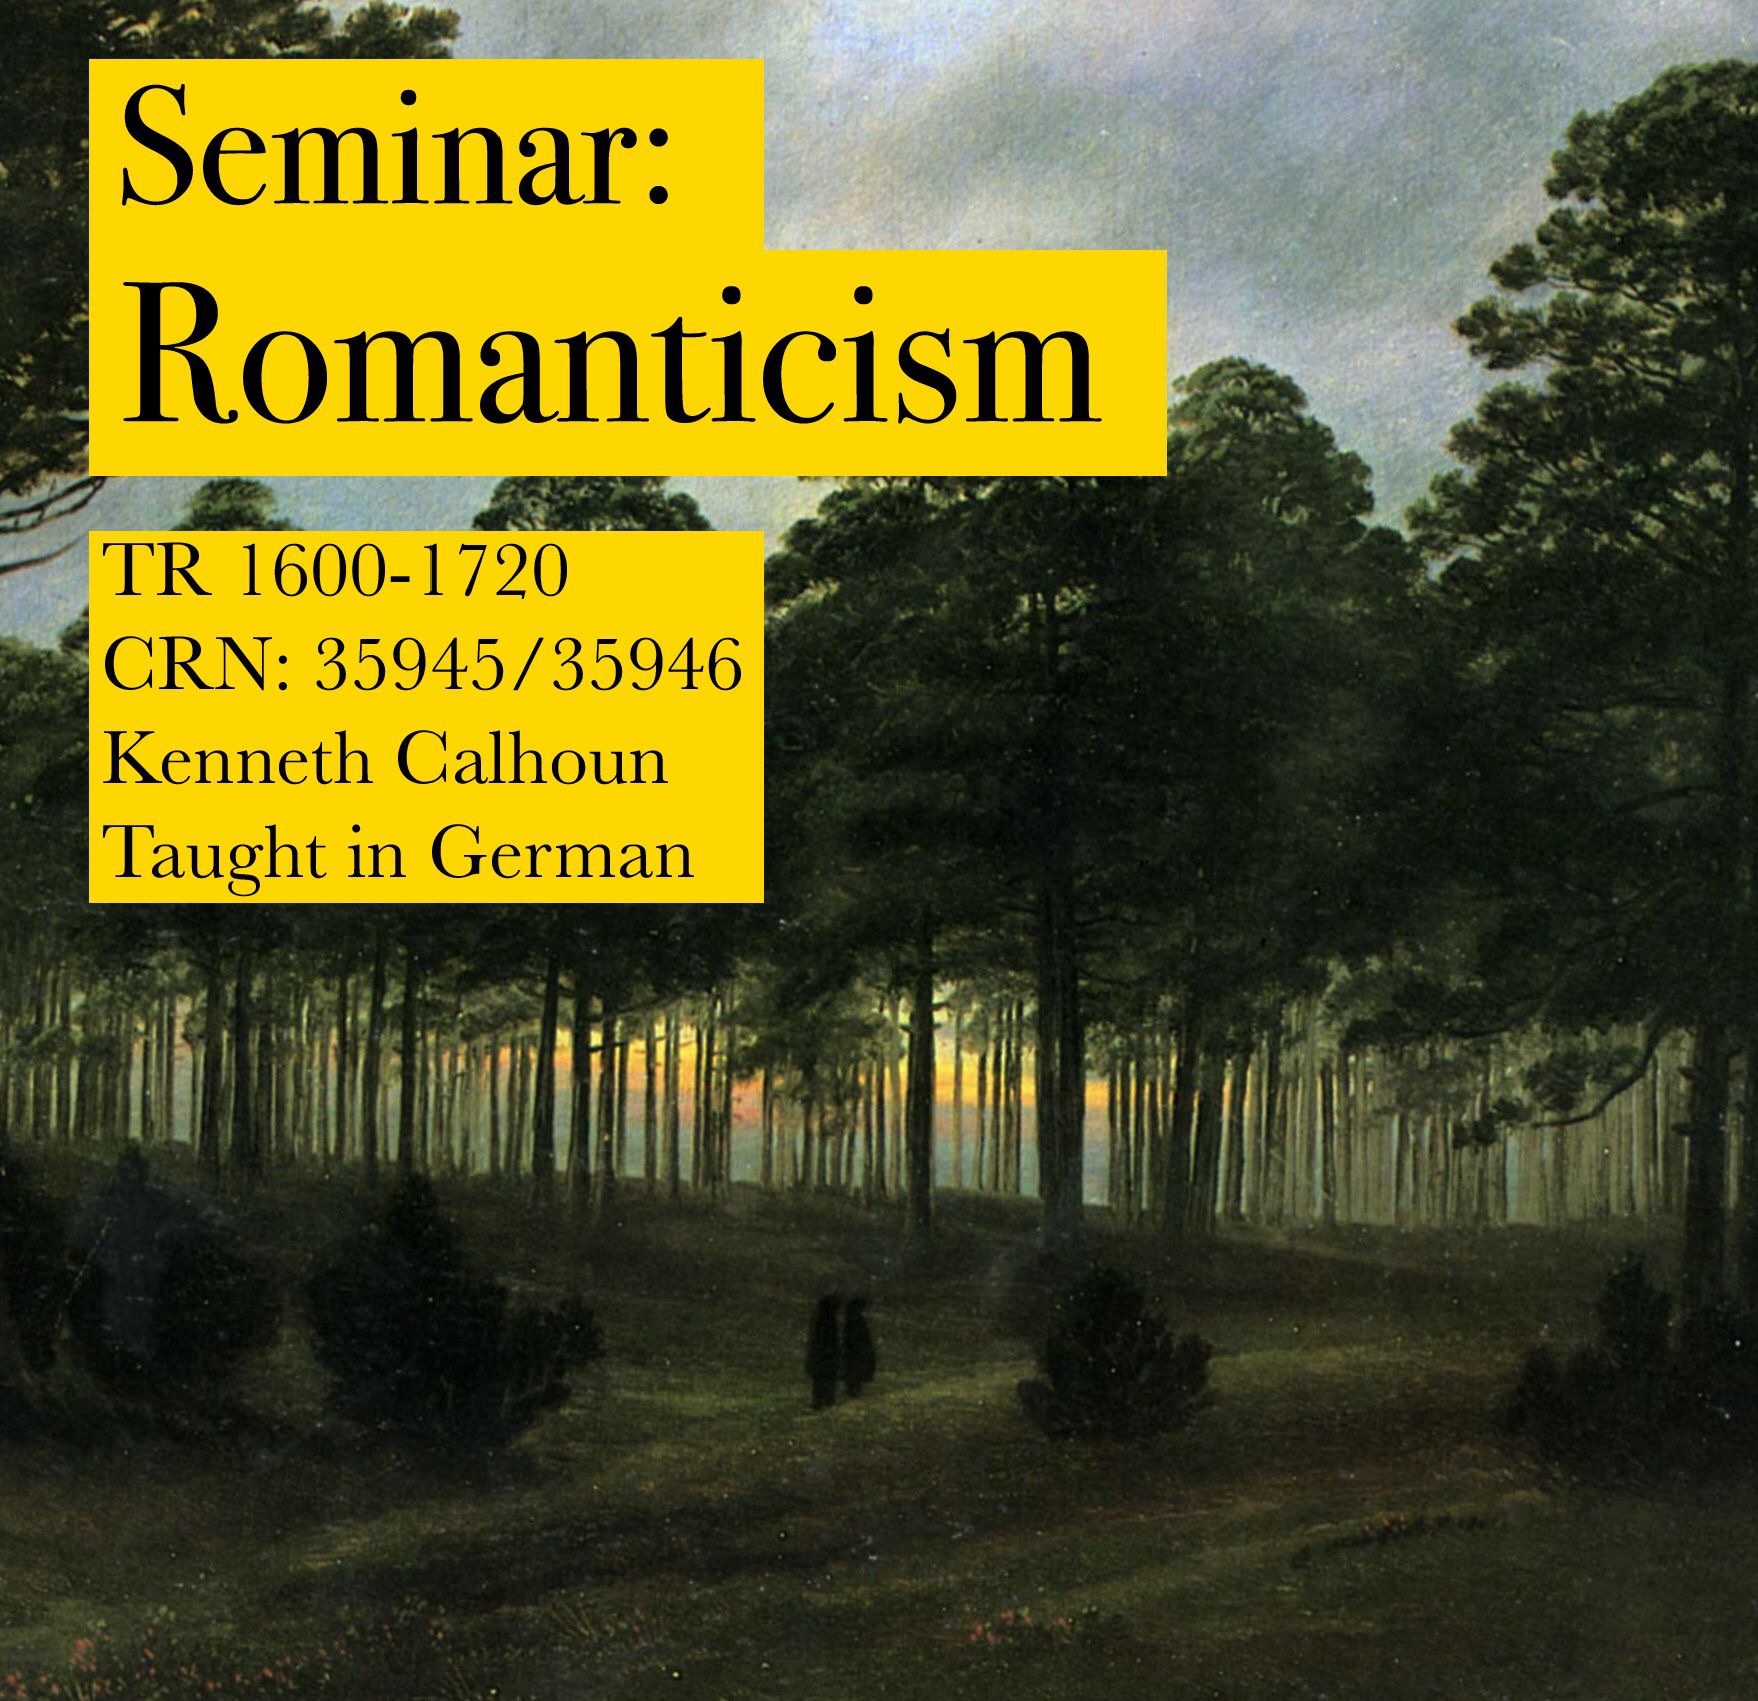 GER 407/507 Seminar: Romanticism 2